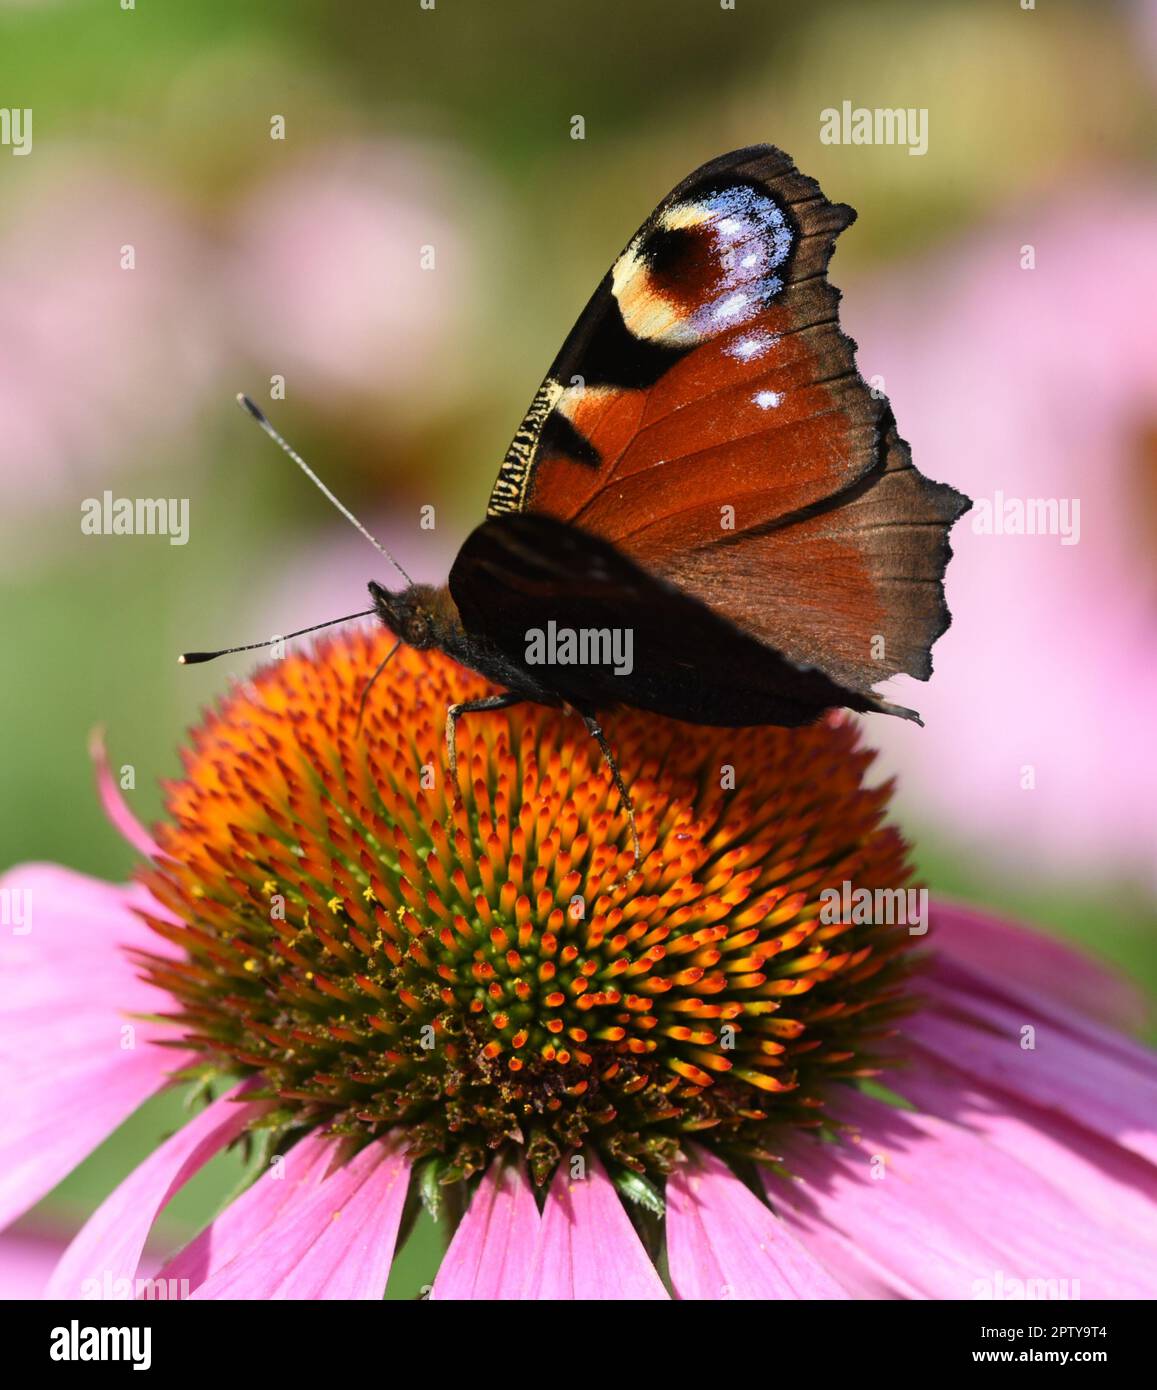 Schmetterlinge sind Insekten mit grossen Fluegeln. Butterflies are insects with large wings. Stock Photo